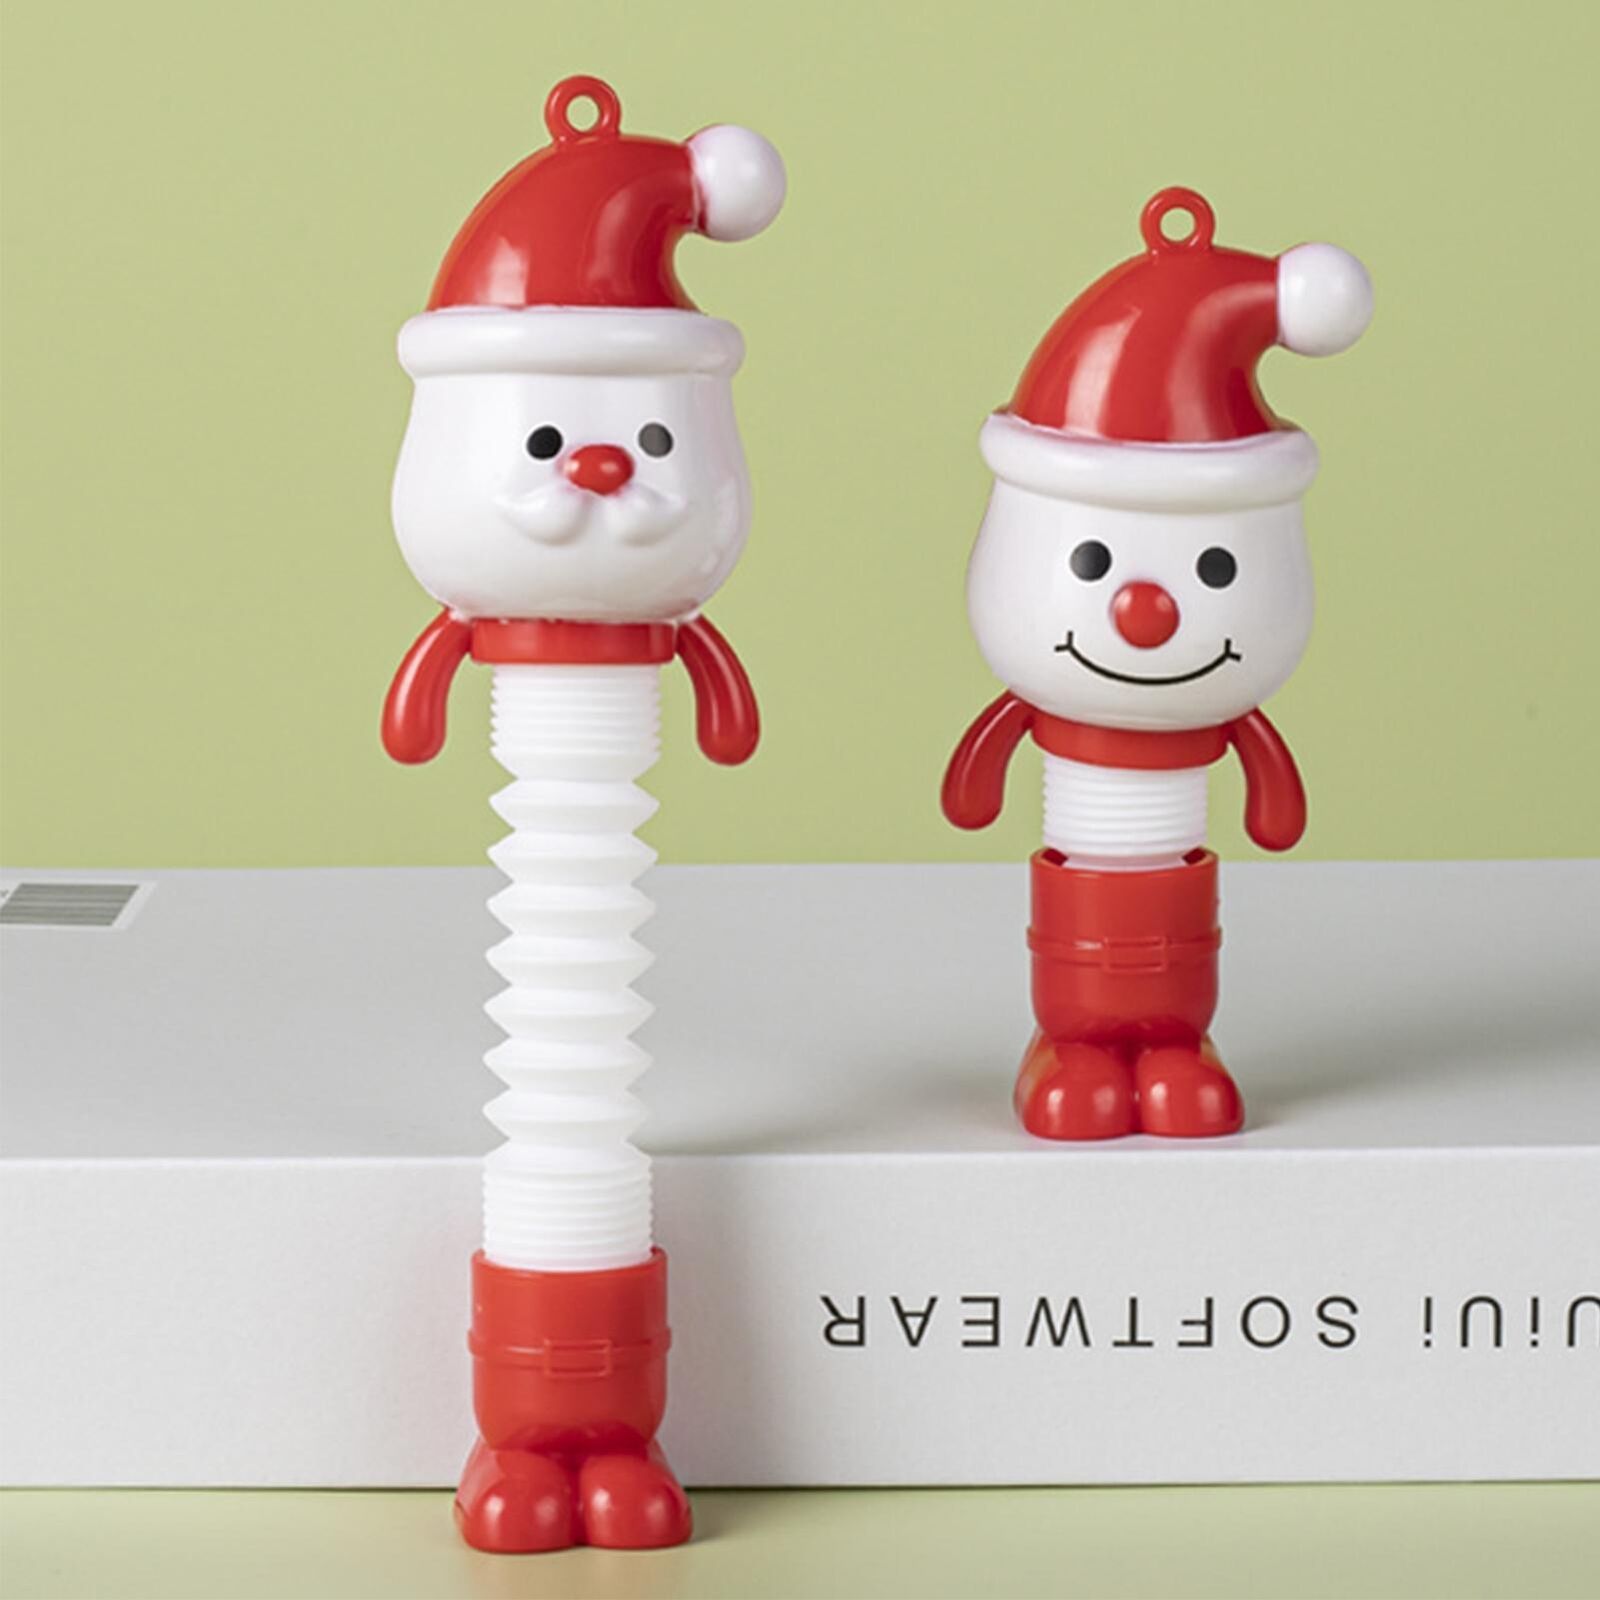 Christmas Santa Claus Snowman Telescopic Sensory Toys Fidget Stress Relief Tube with Light